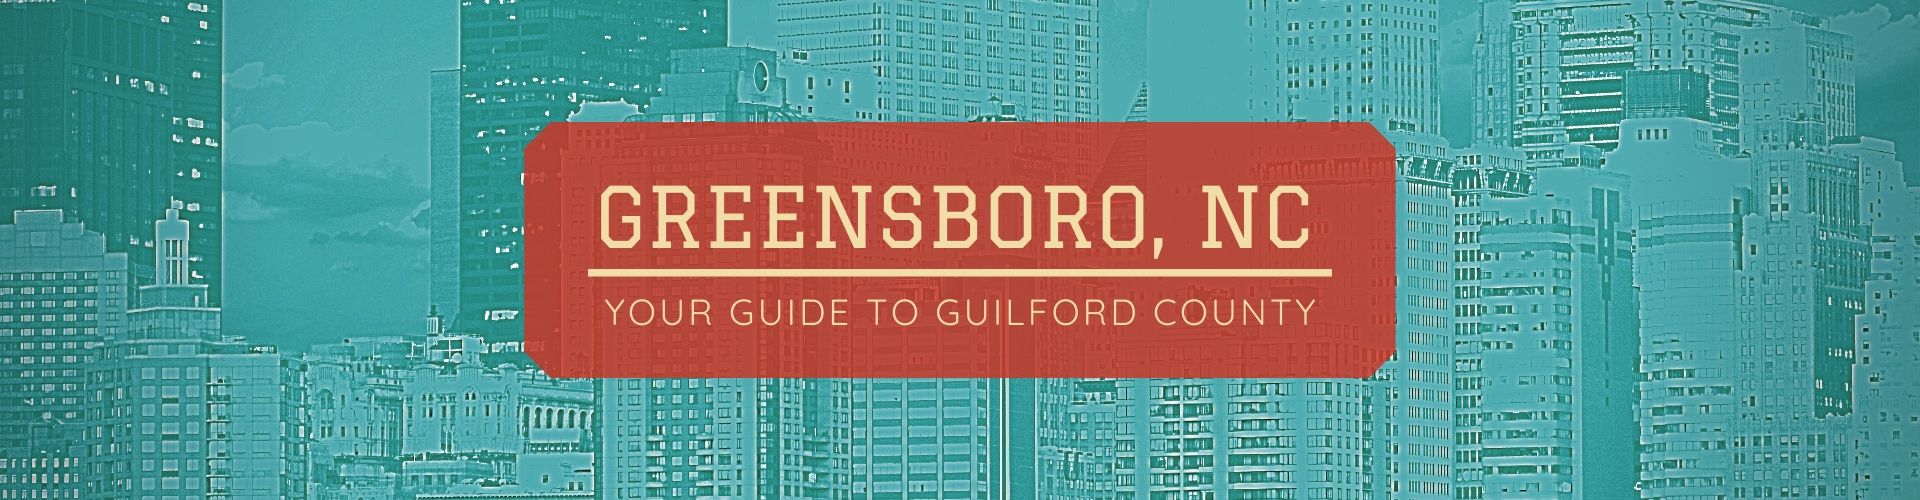 Greensboro NC Guilford County